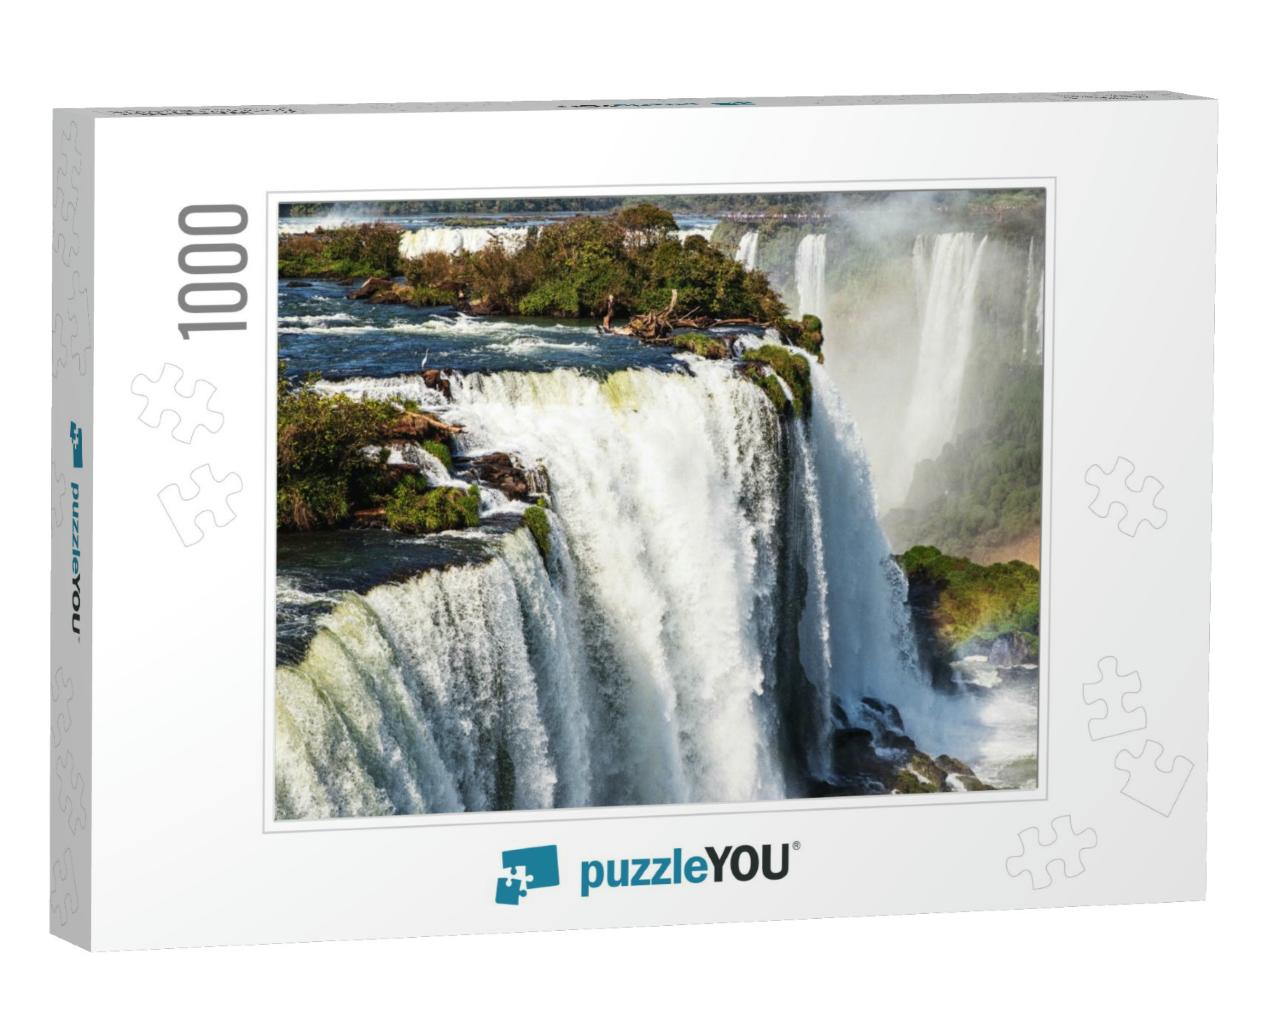 Foz De Iguazu, Largest Waterfalls, Iguazu National Park... Jigsaw Puzzle with 1000 pieces